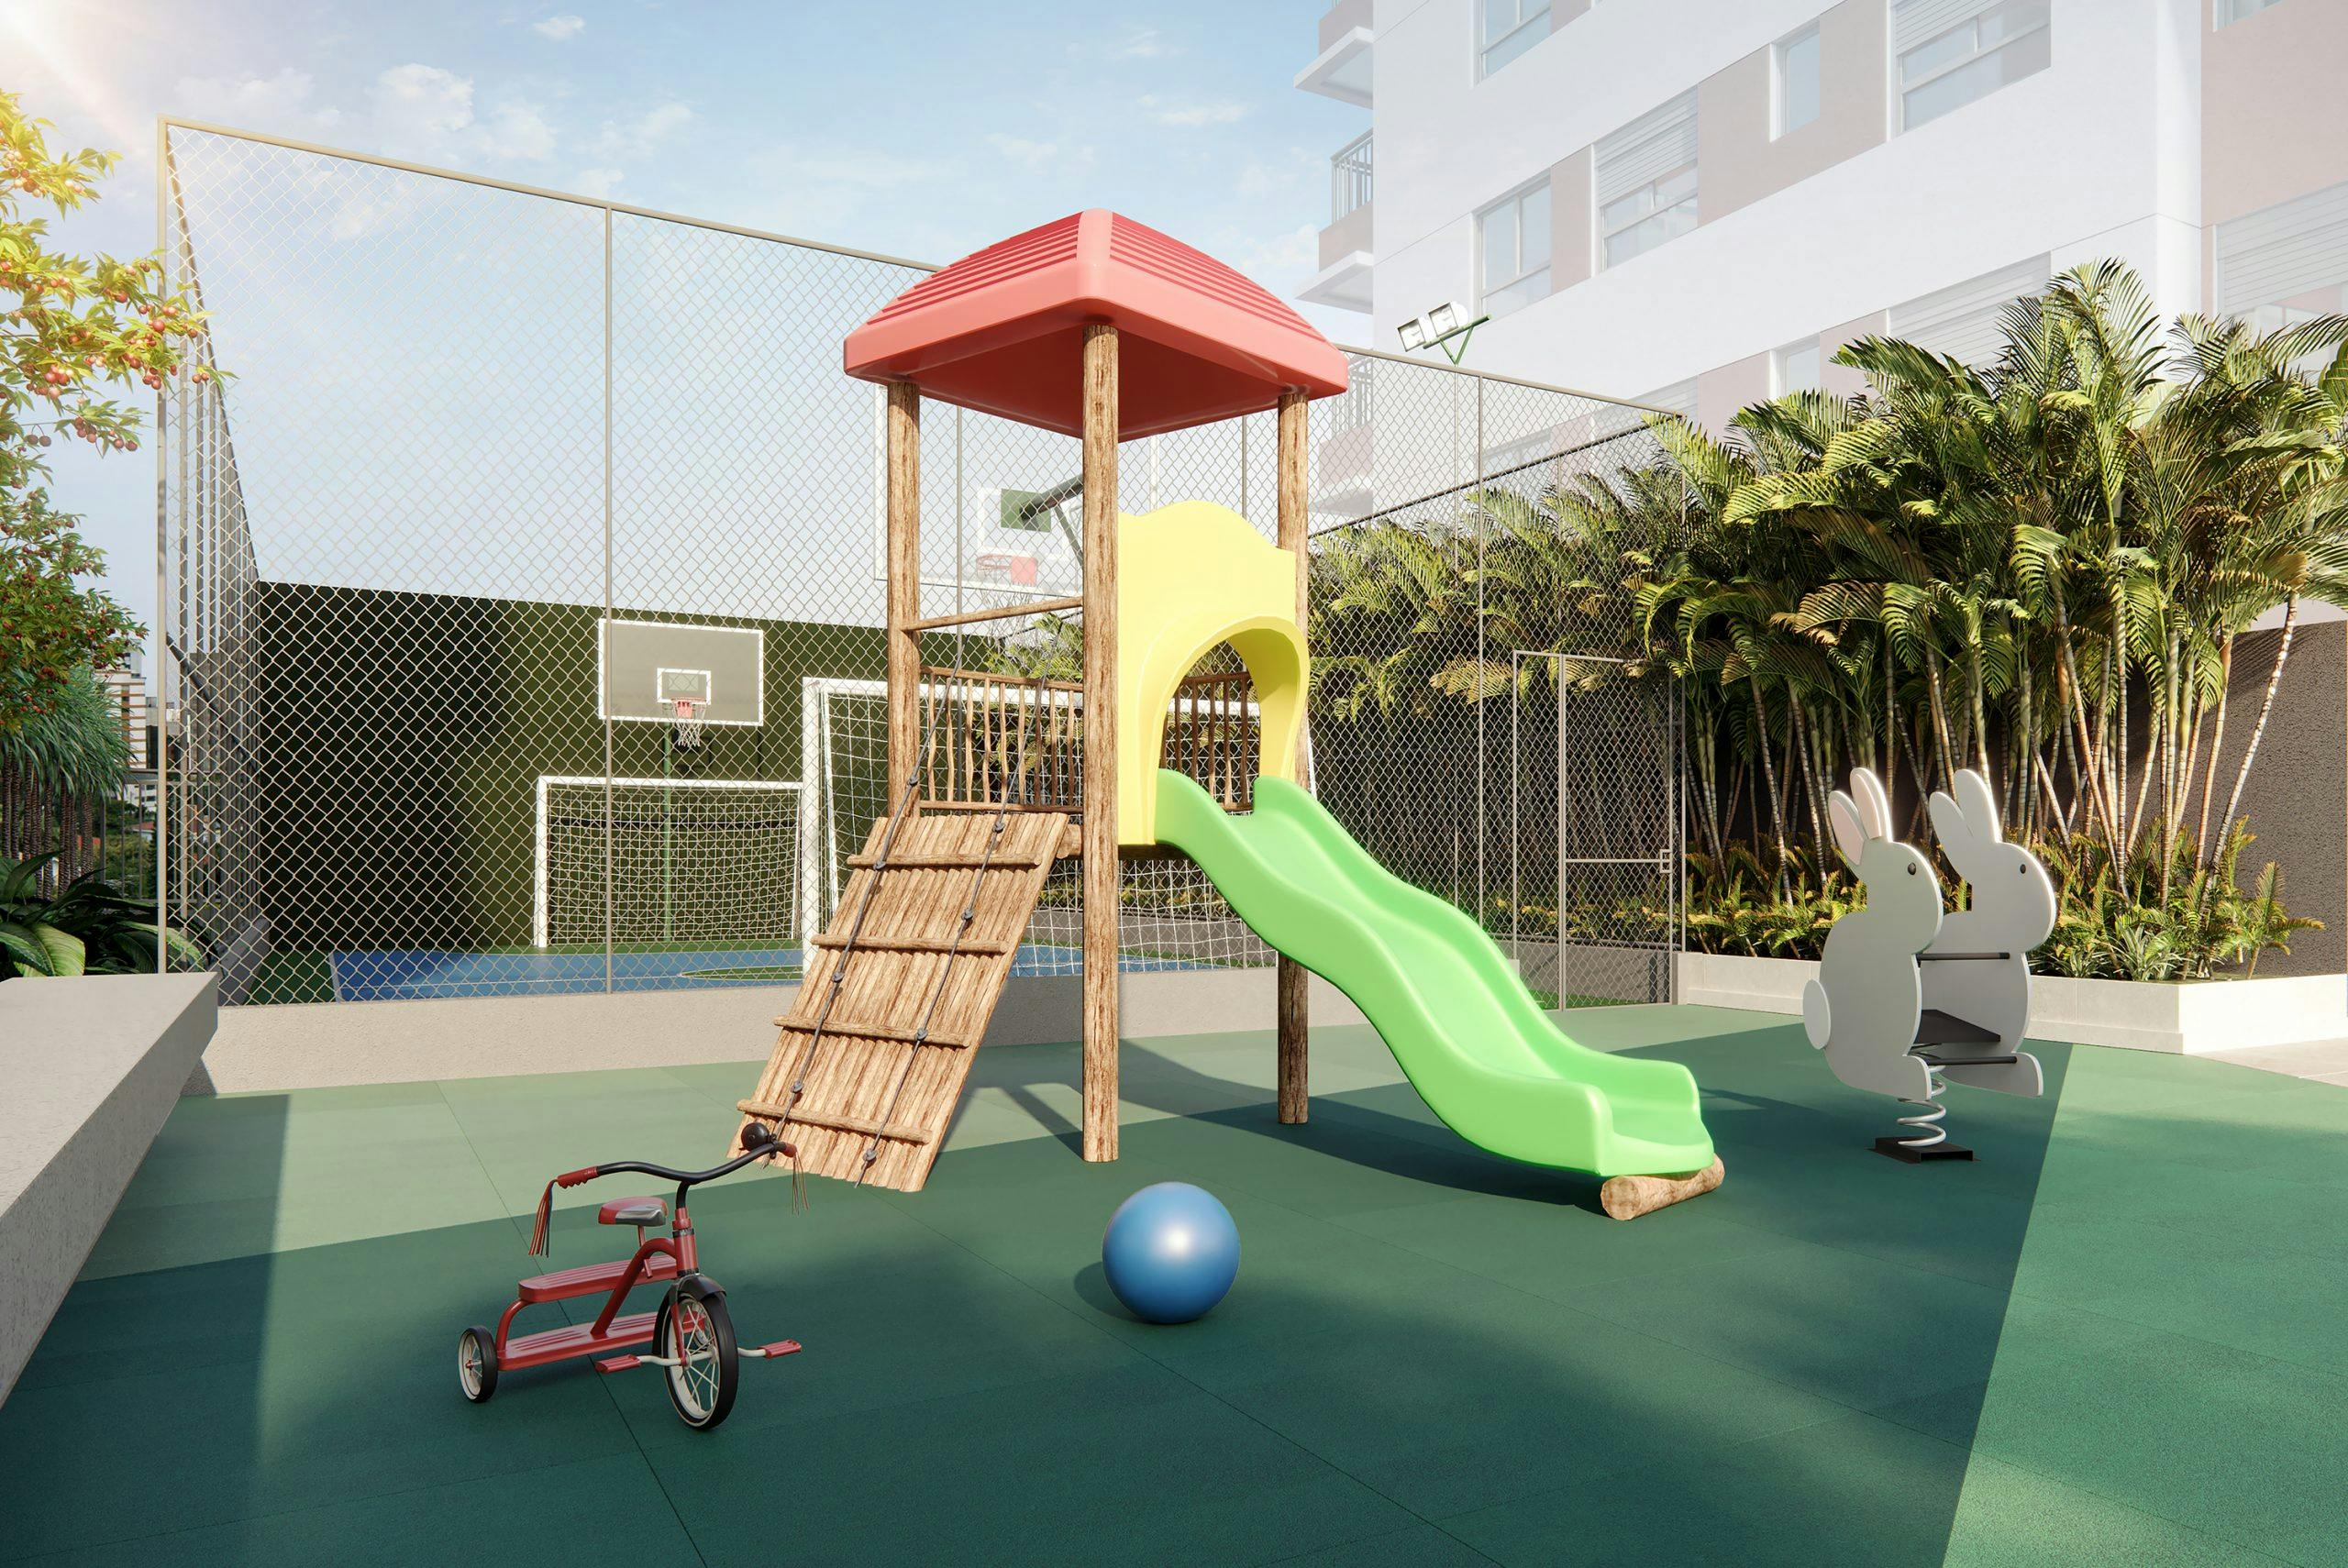 Imagem 3D do Playground Torres Eucalipto e Jatobá